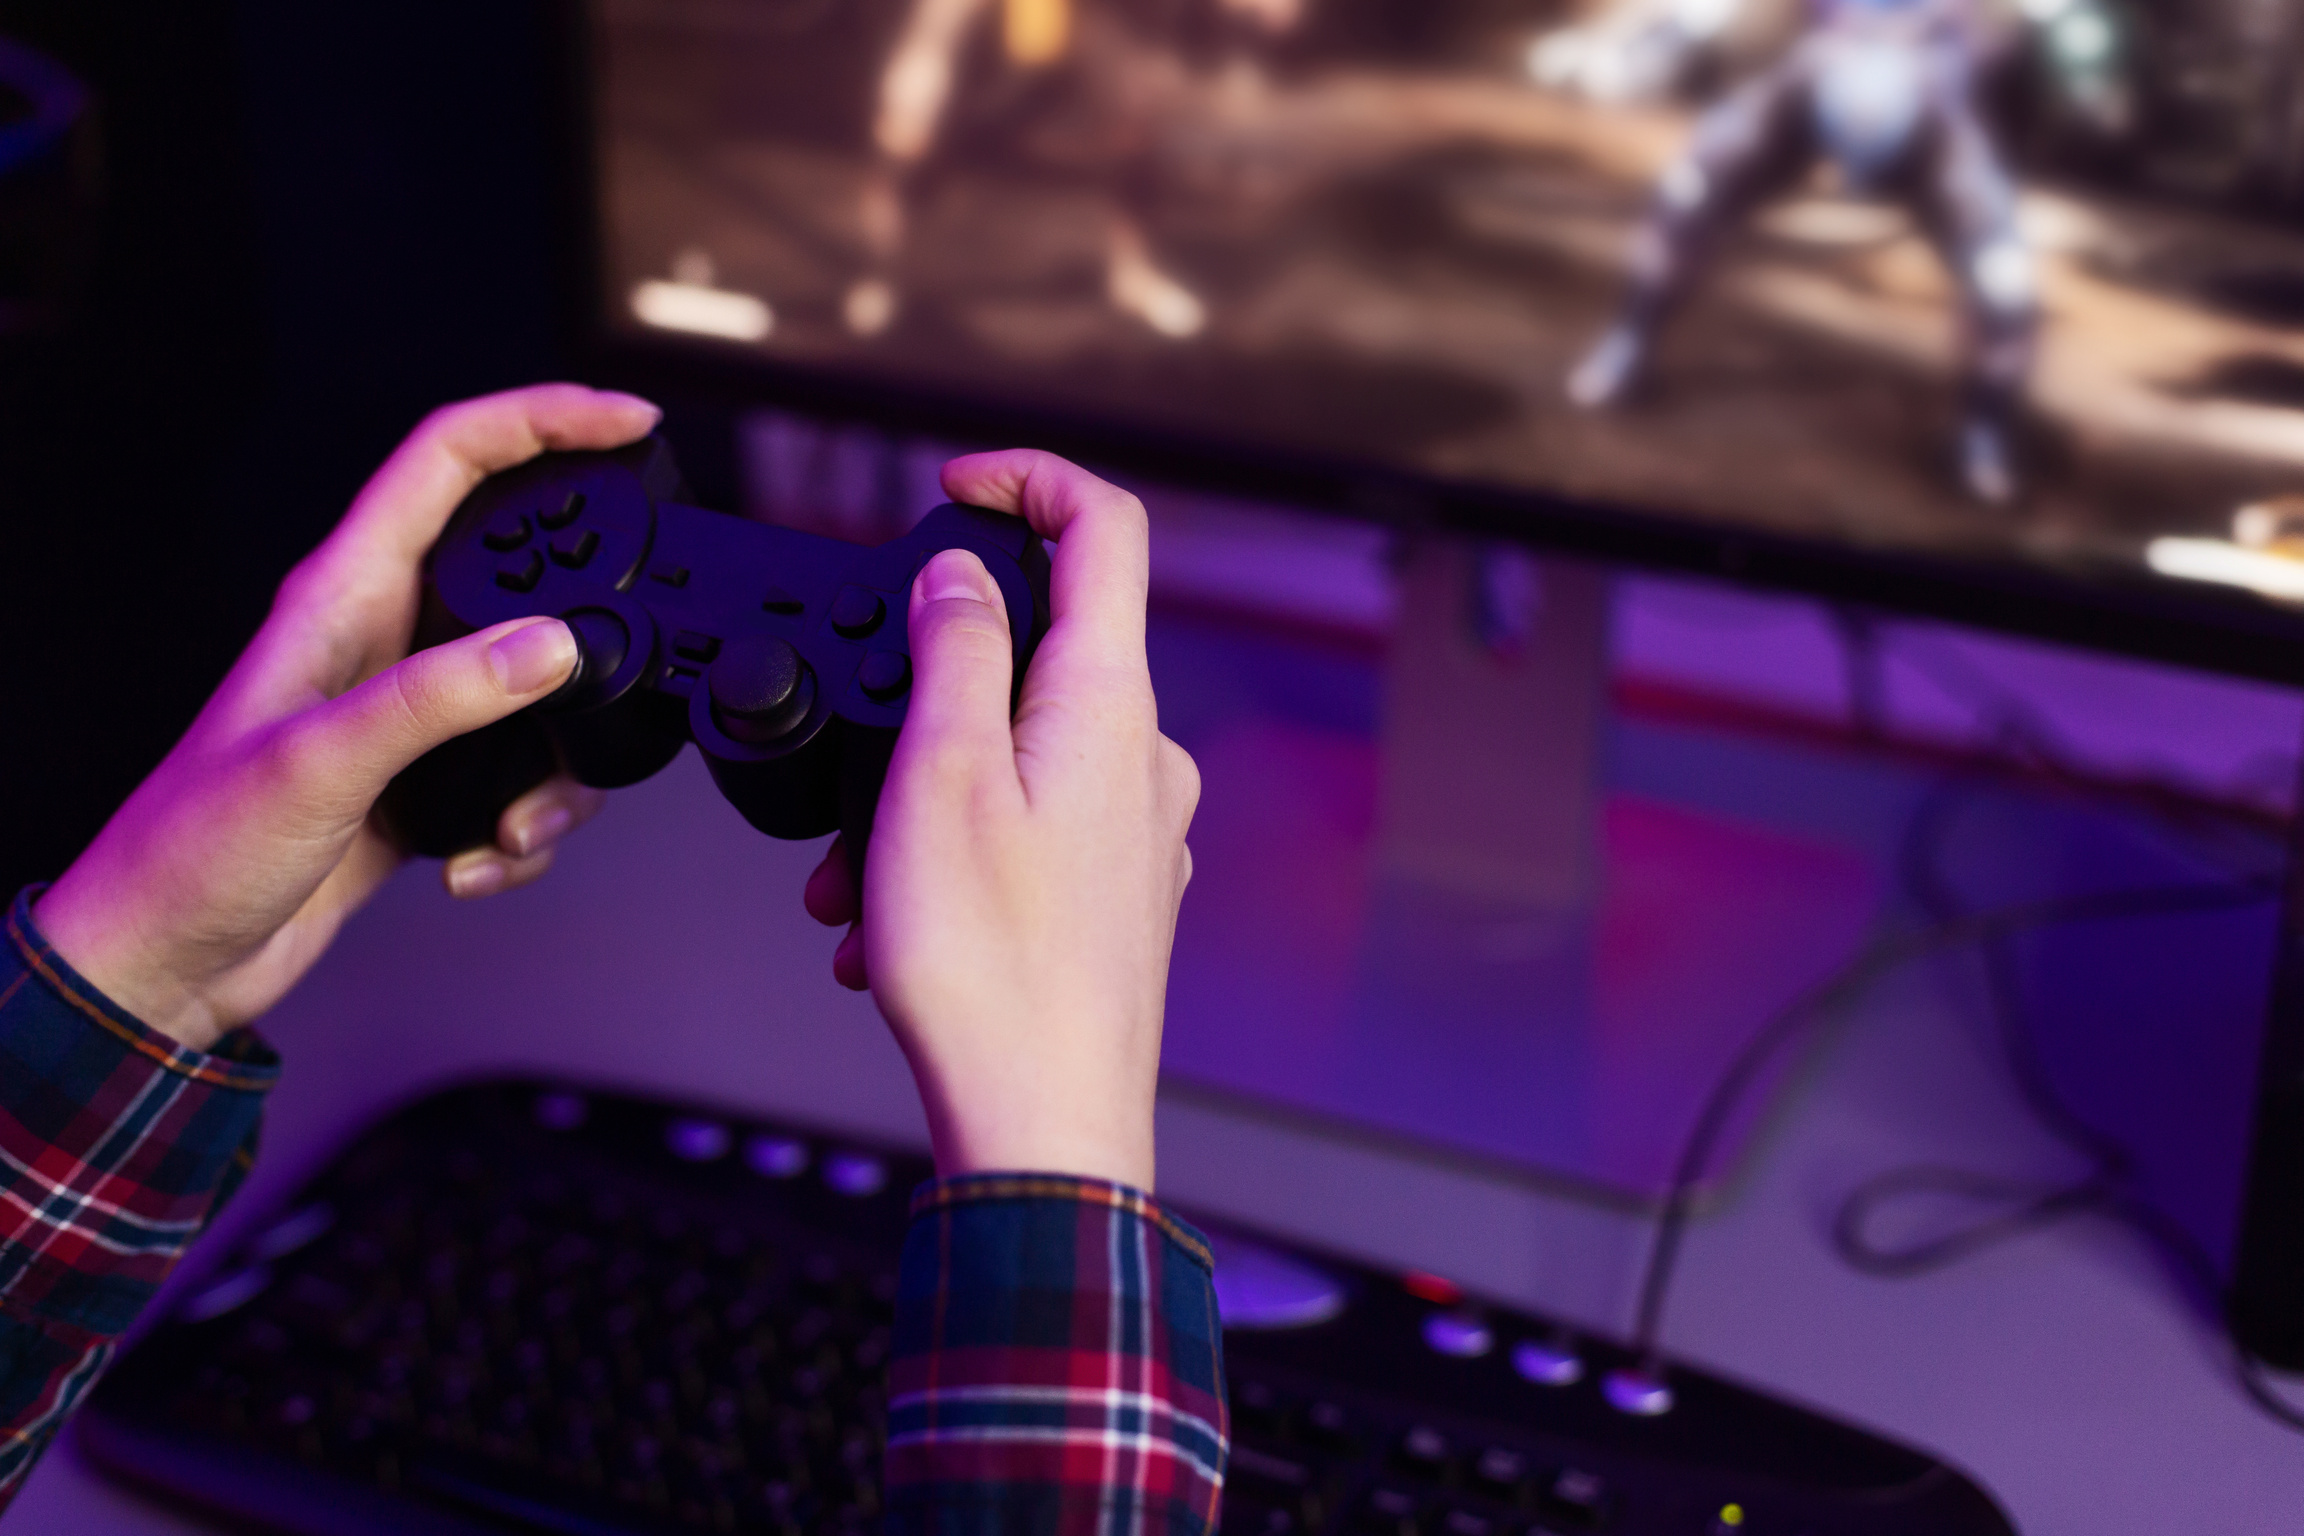 Gamer playing video game, holding joystick, free space